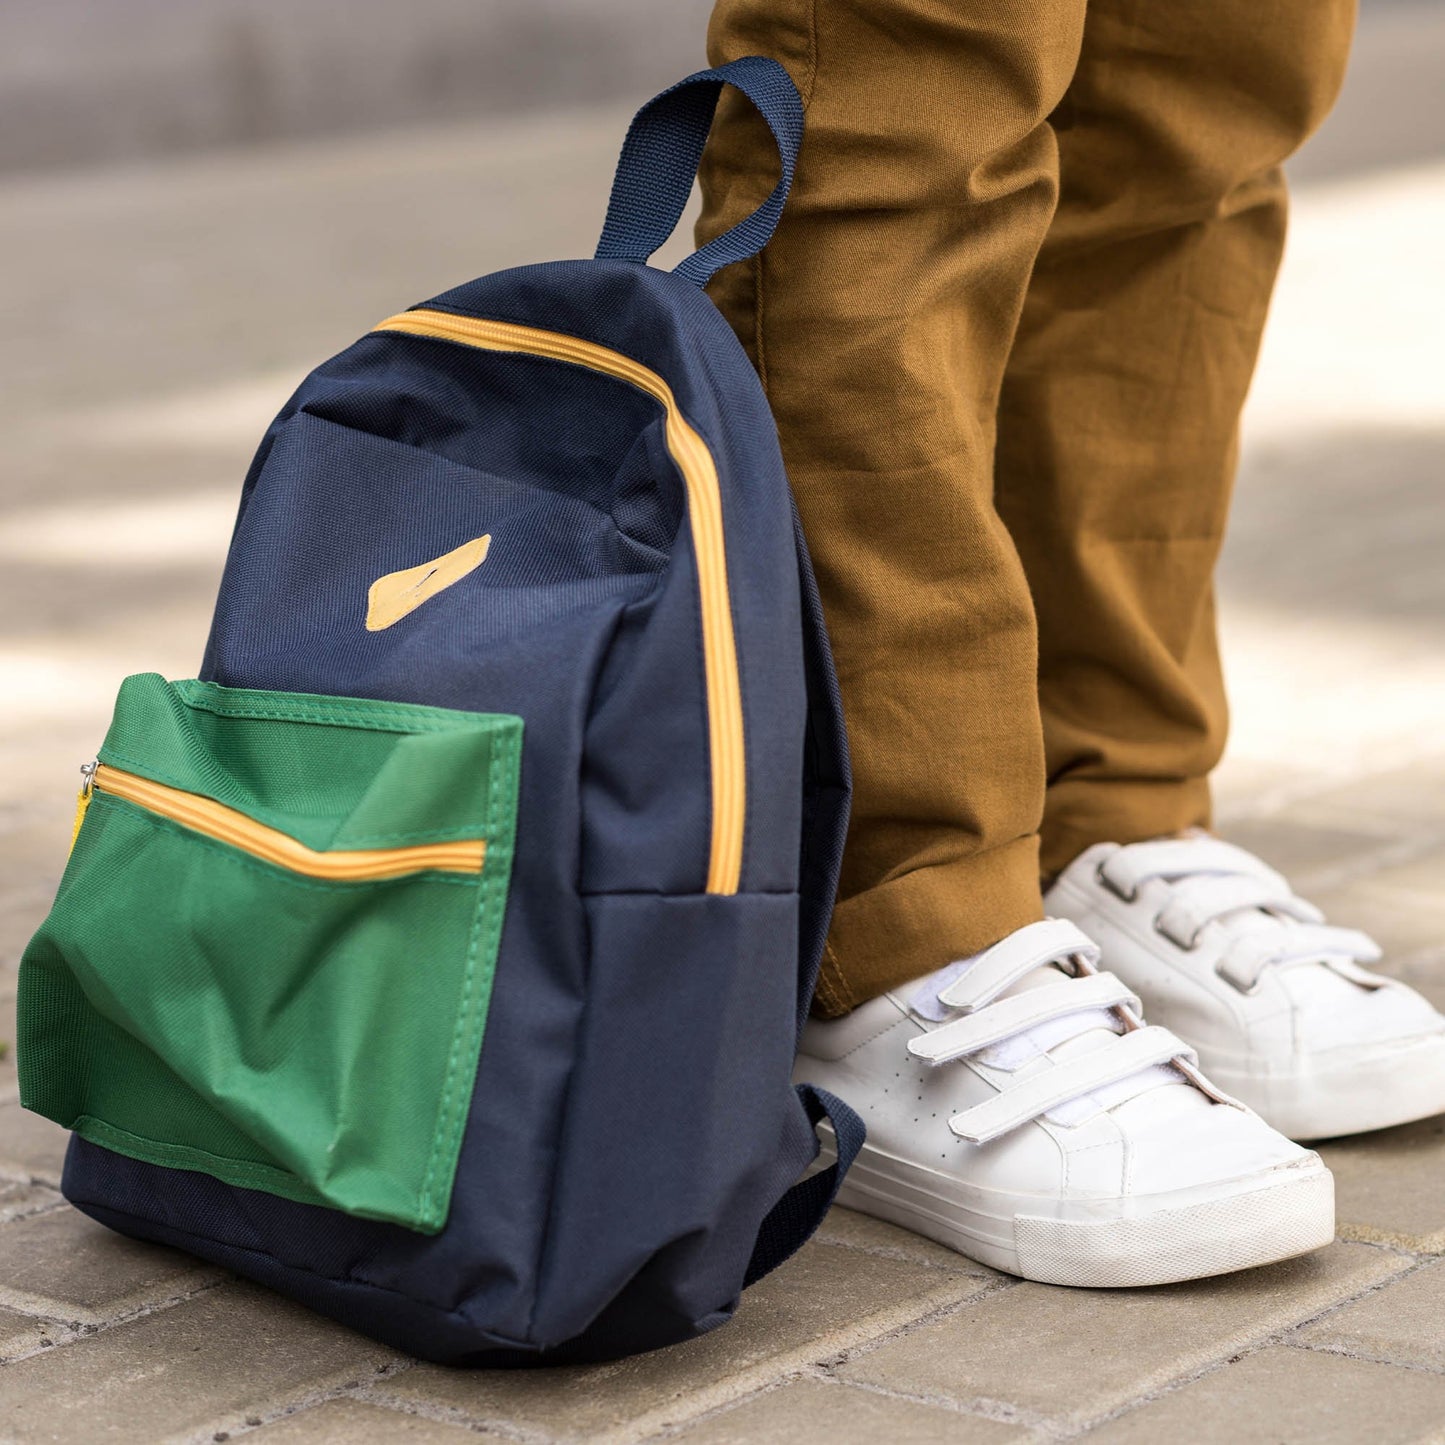 School Backpacks & Supplies for Kids In Need